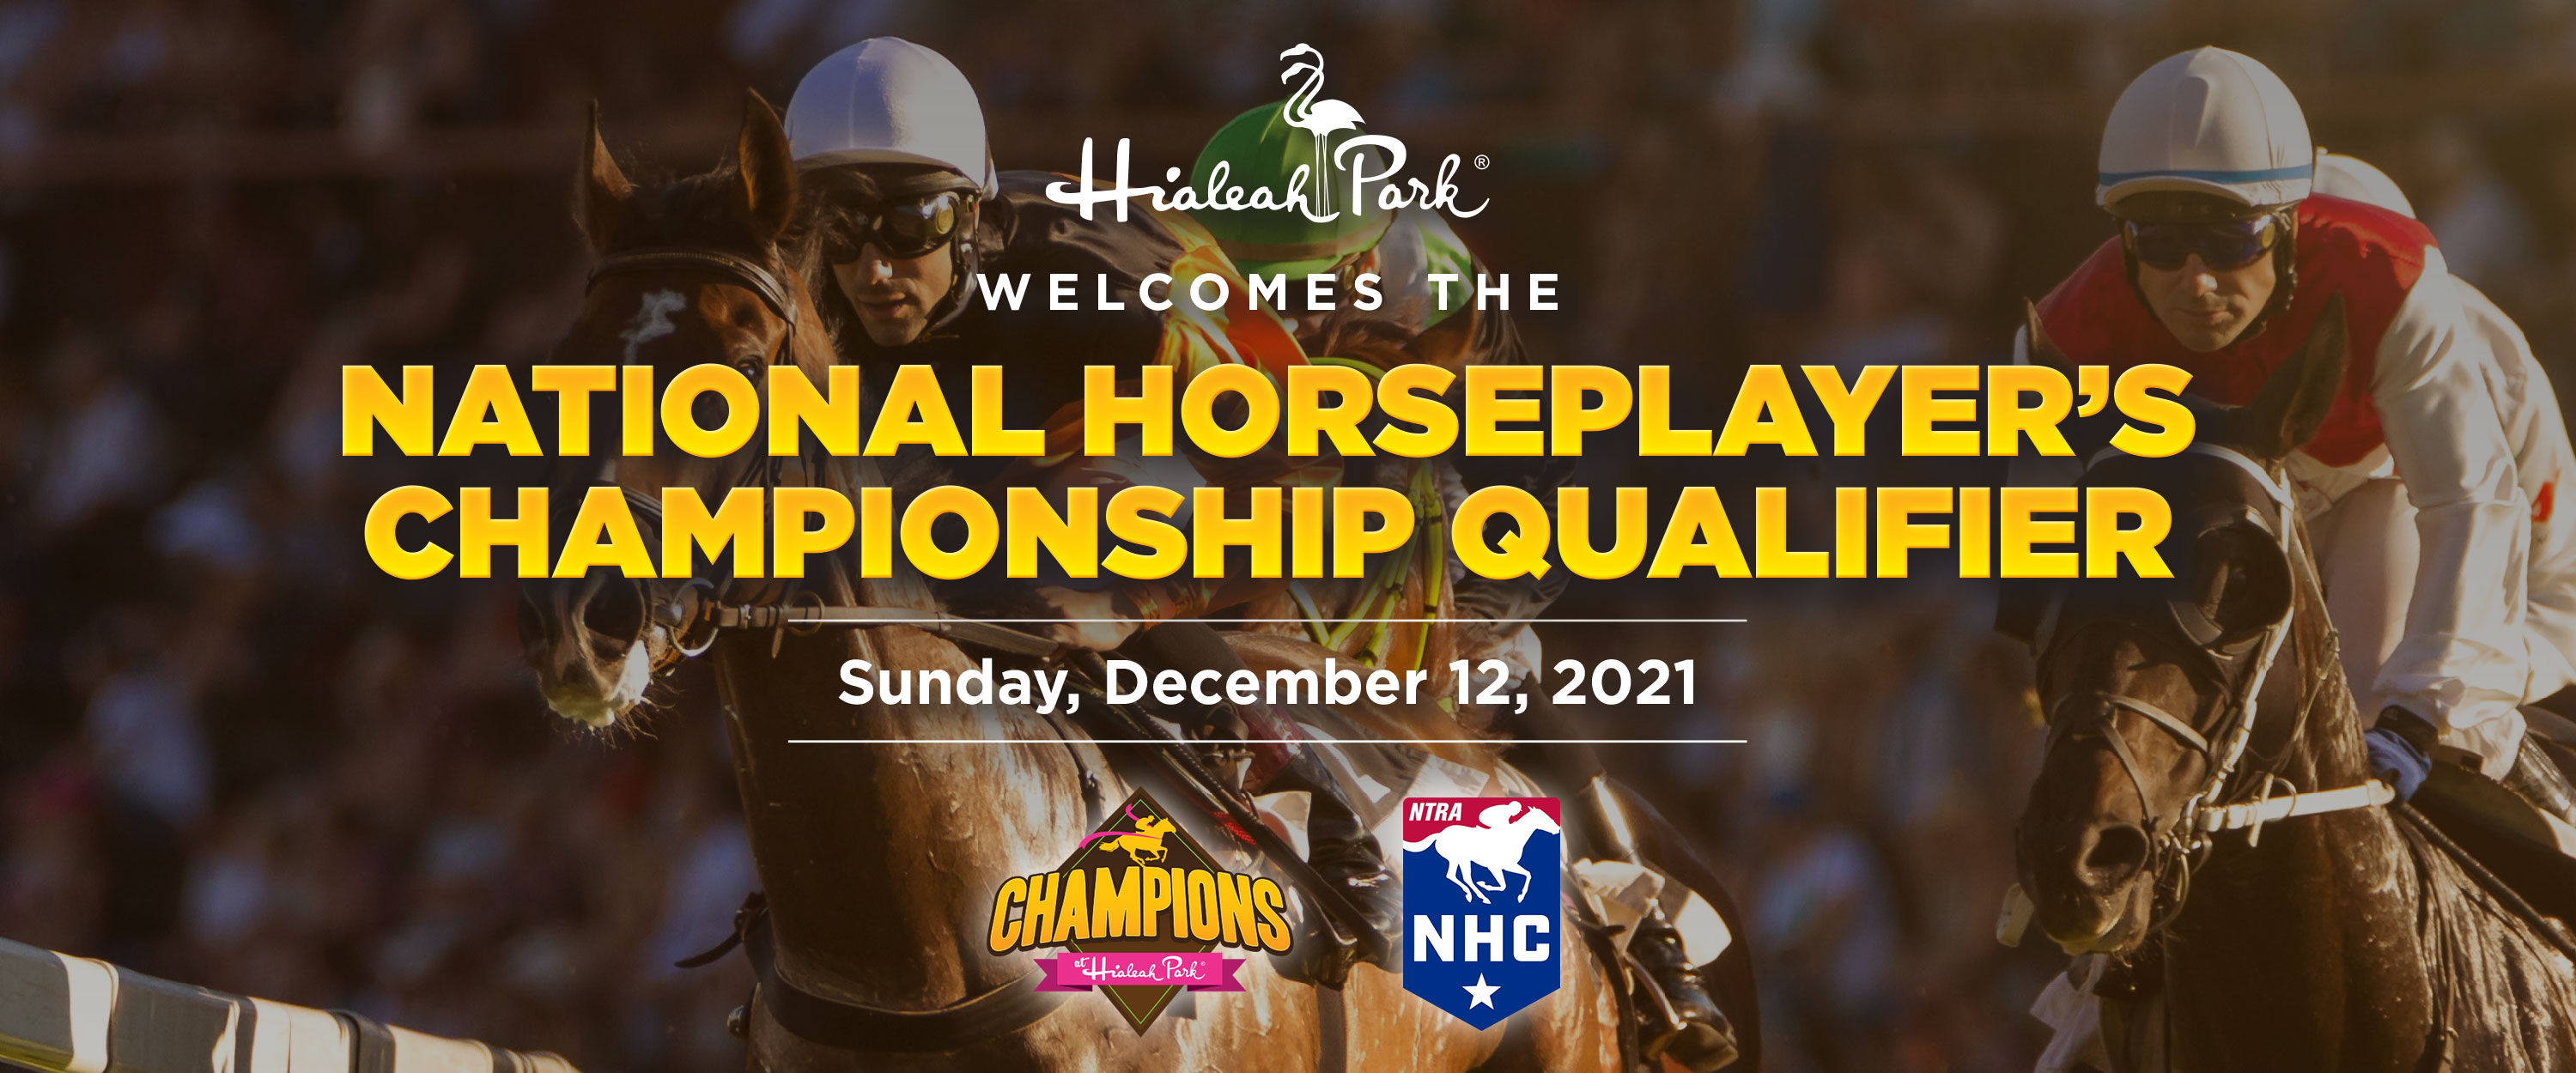 National Horseplayers Championship Qualifier - Sunday, December 12